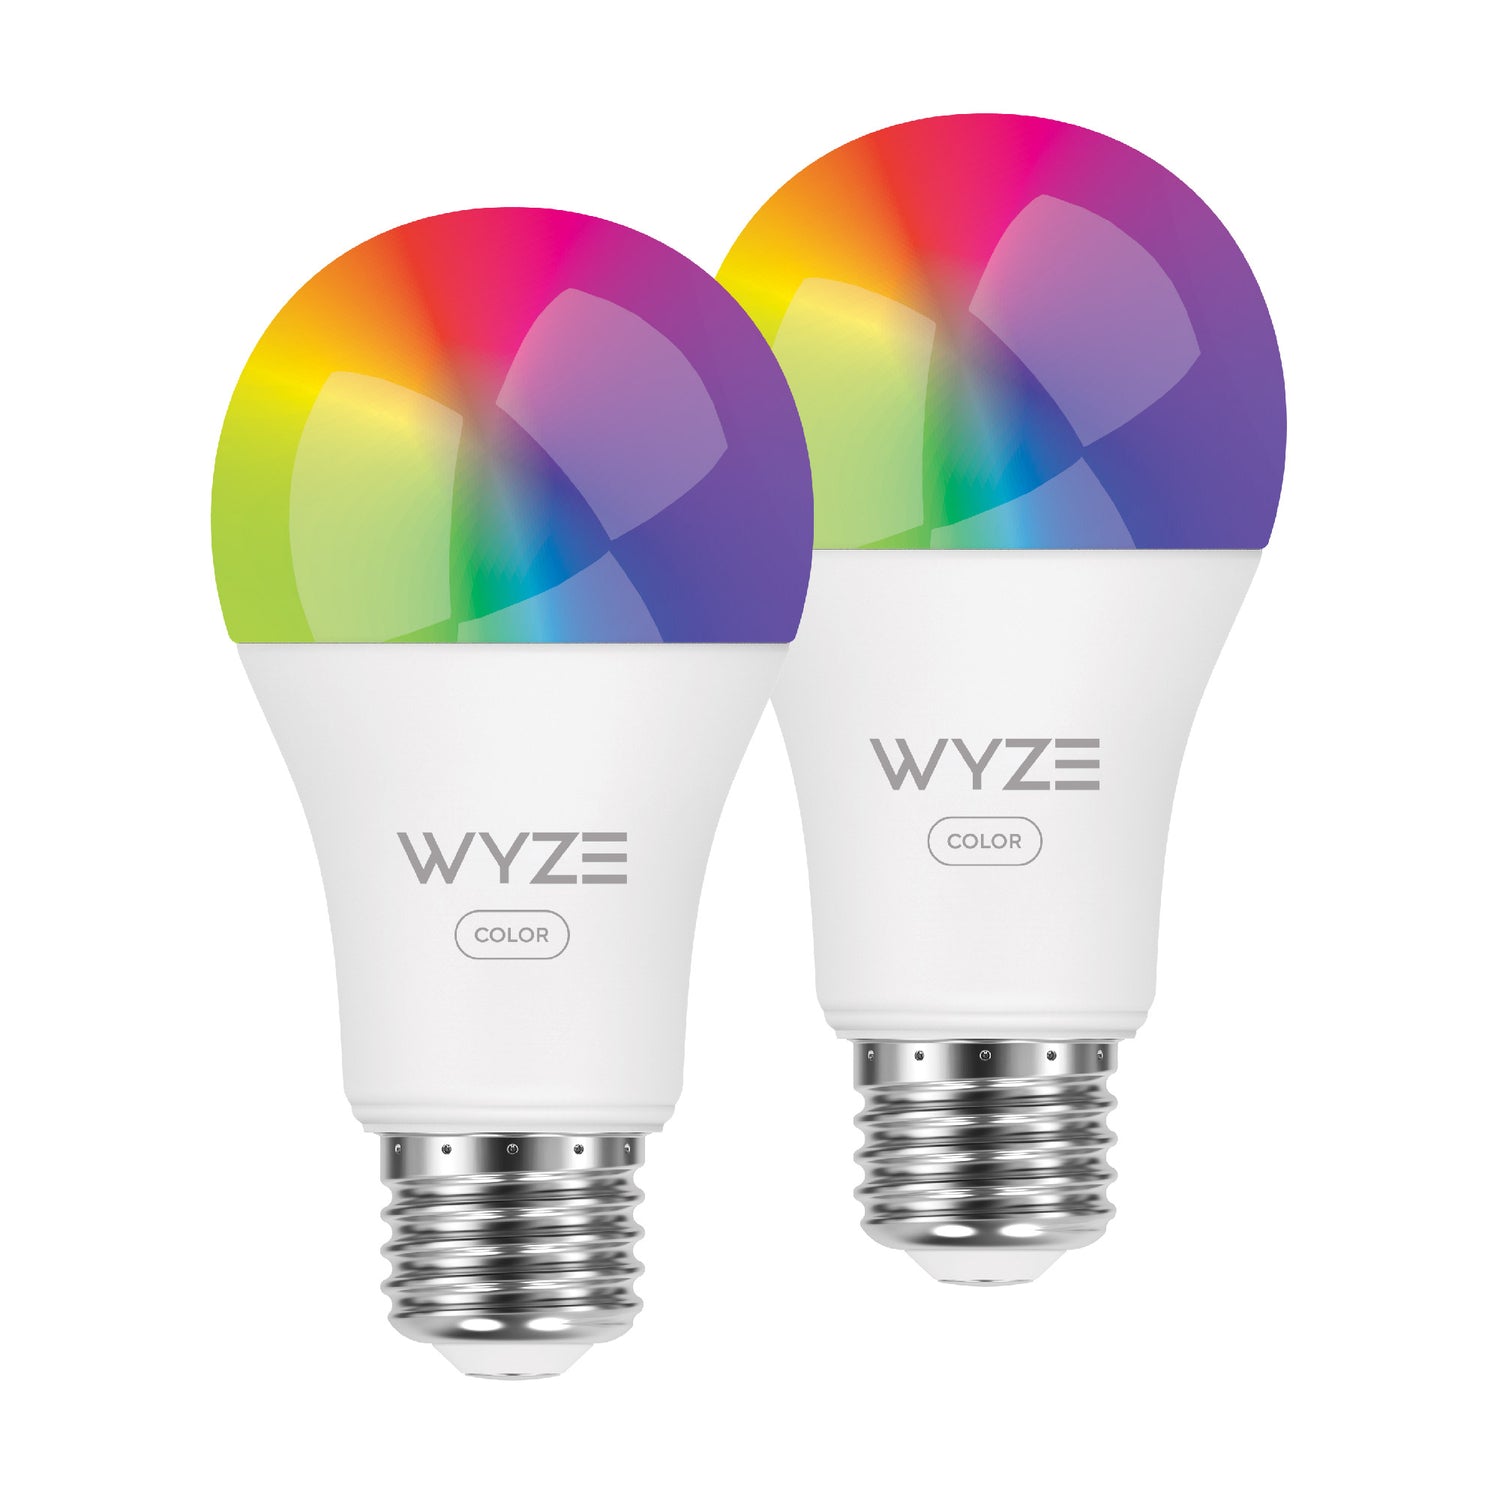 binden kant ambulance Best Color LED, Wifi & Dimmable Smart Light Bulbs | Wyze Bulb Color